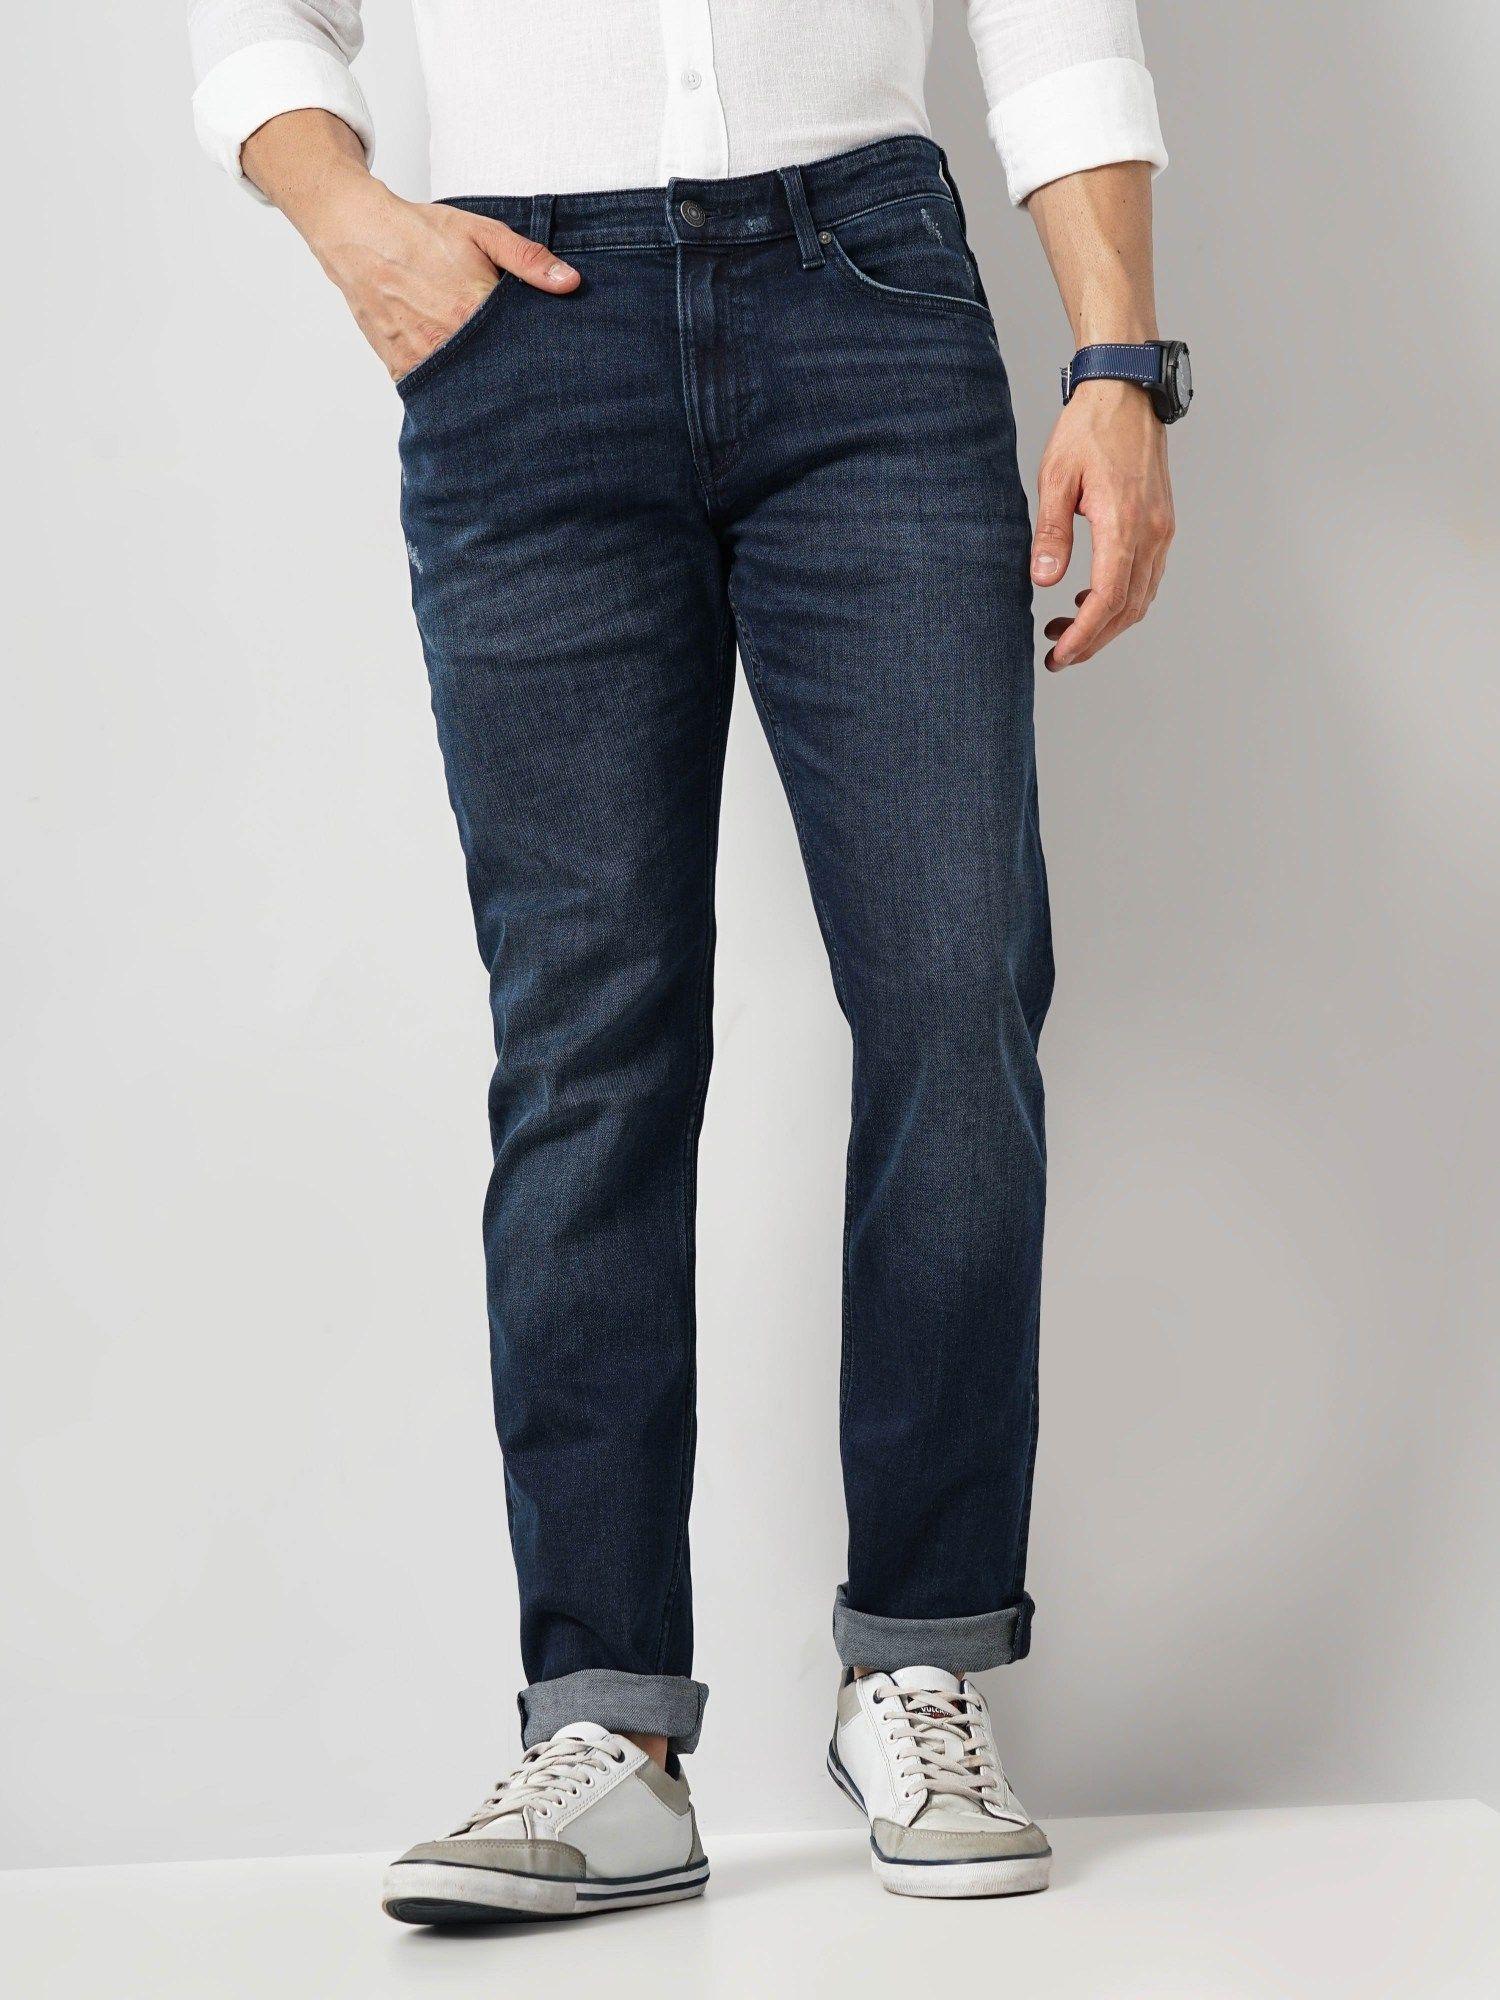 men's navy blue solid jeans